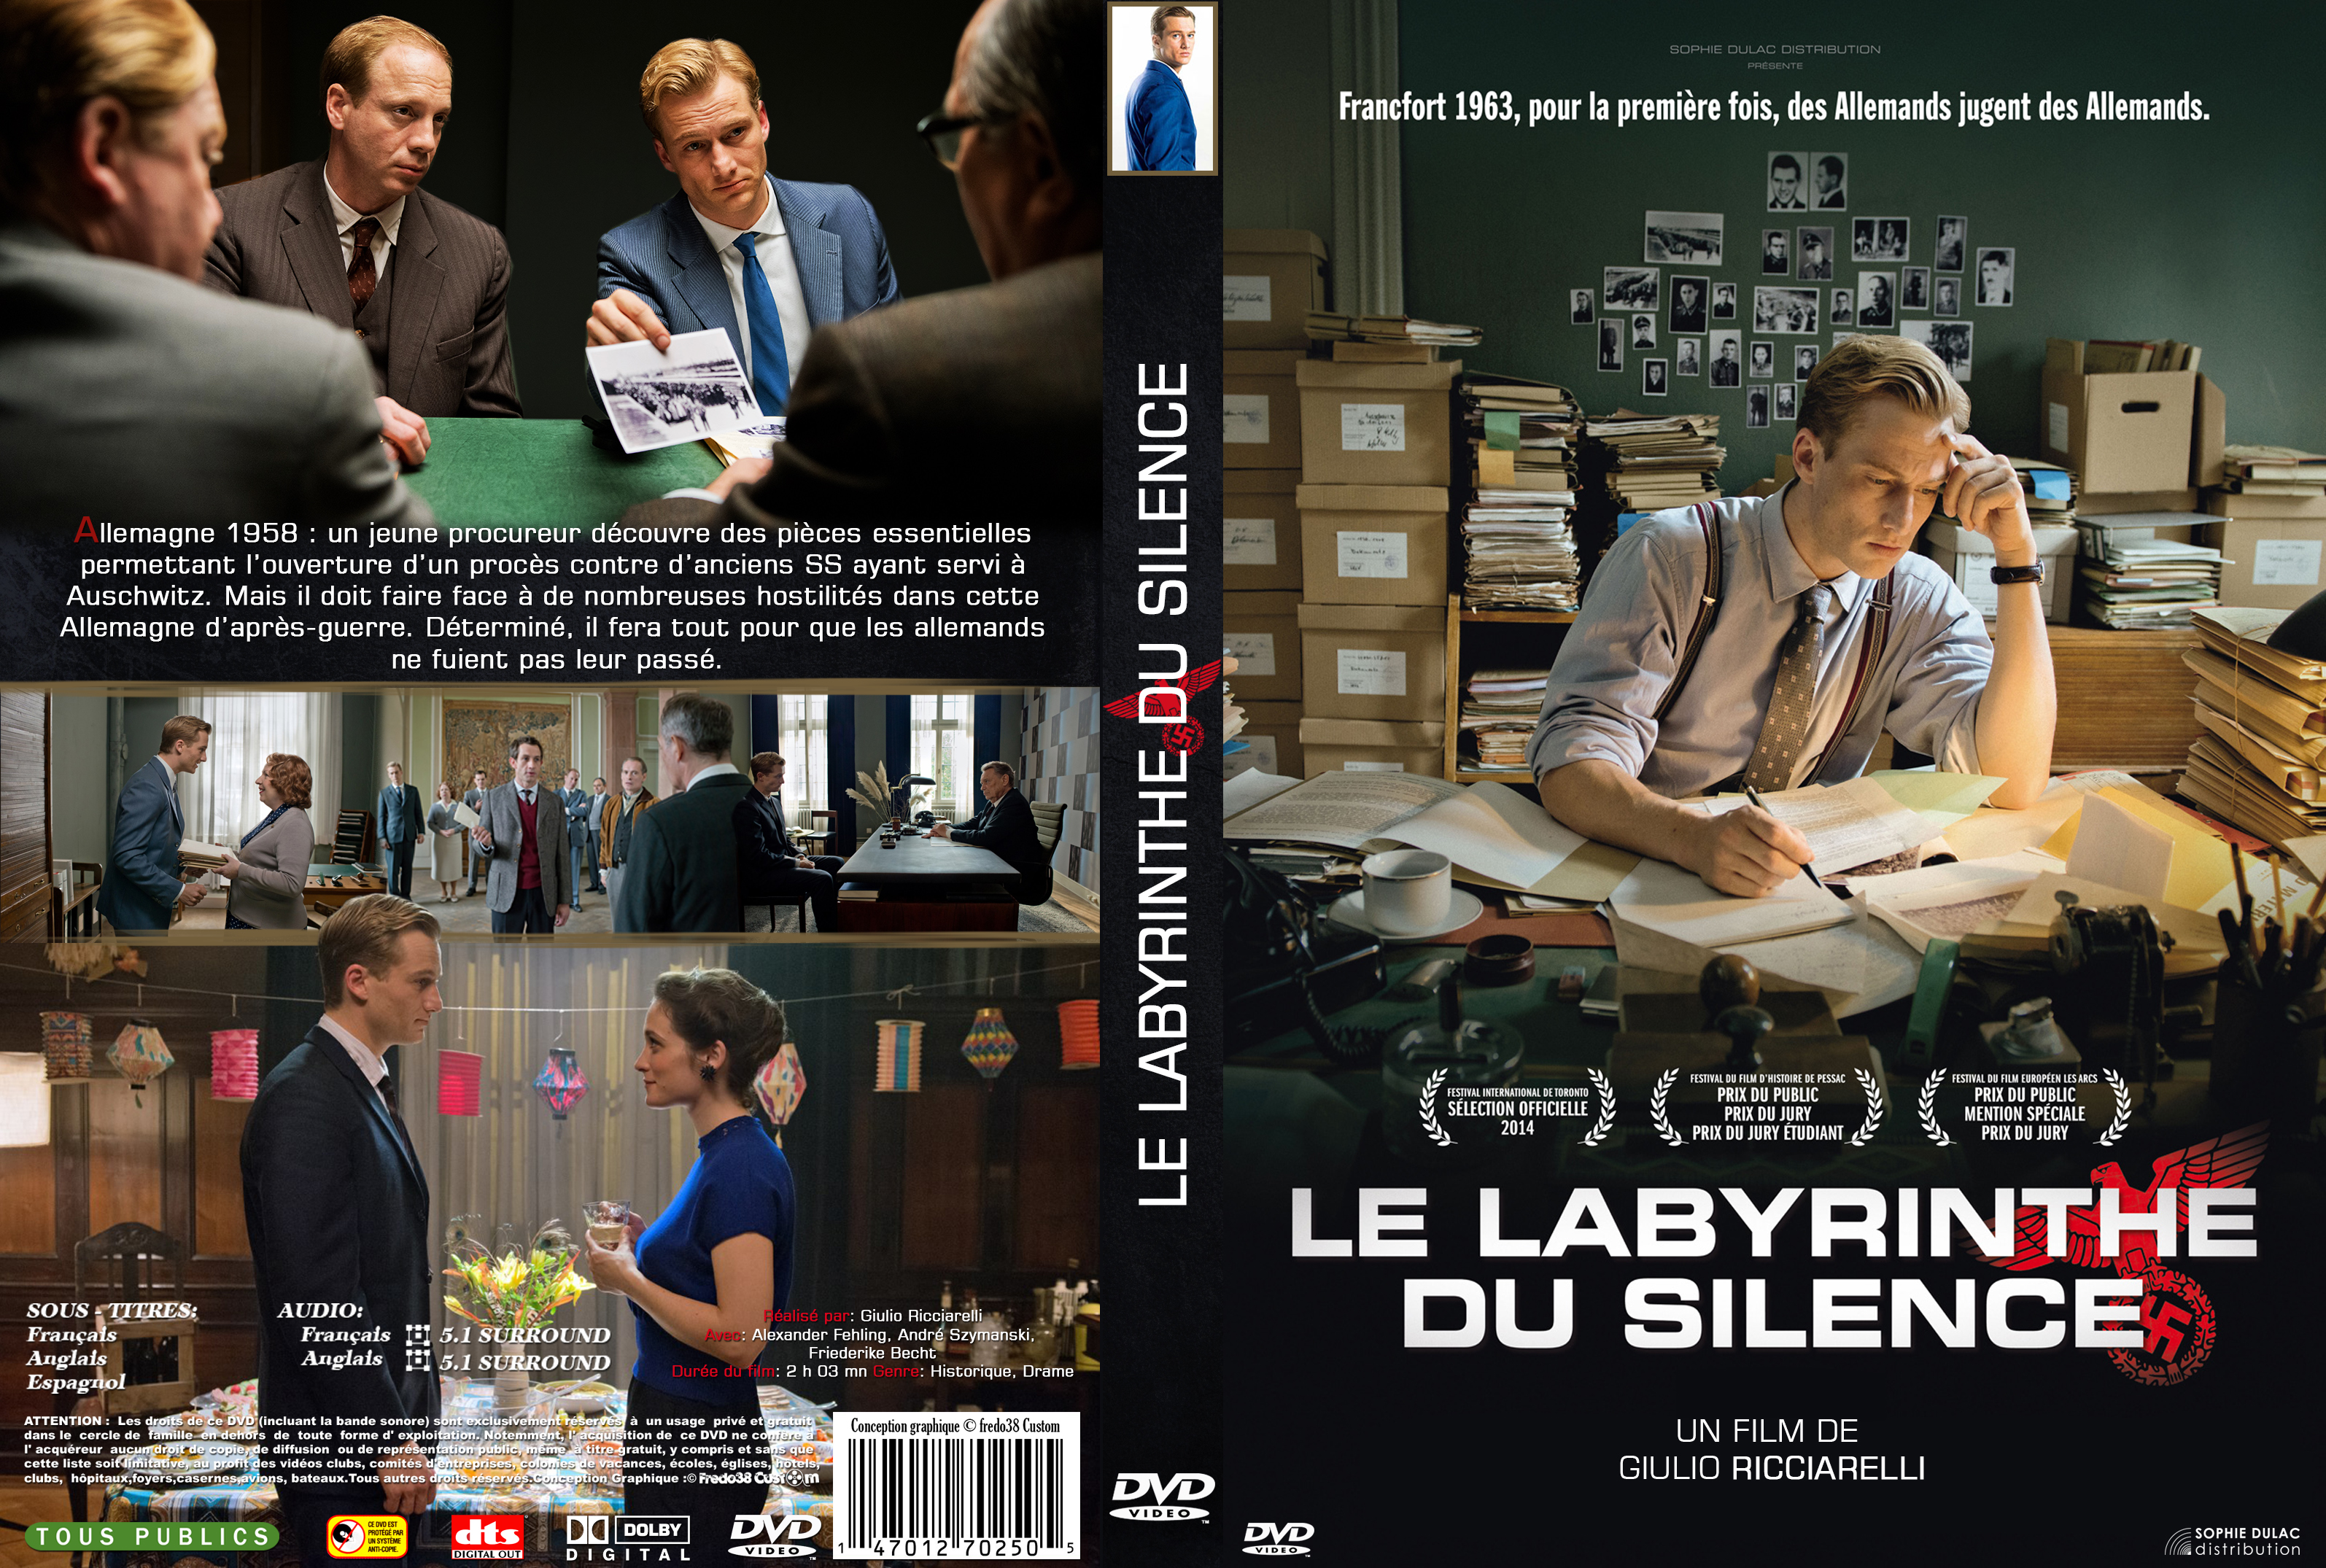 Jaquette DVD Le Labyrinthe Du Silence custom v2